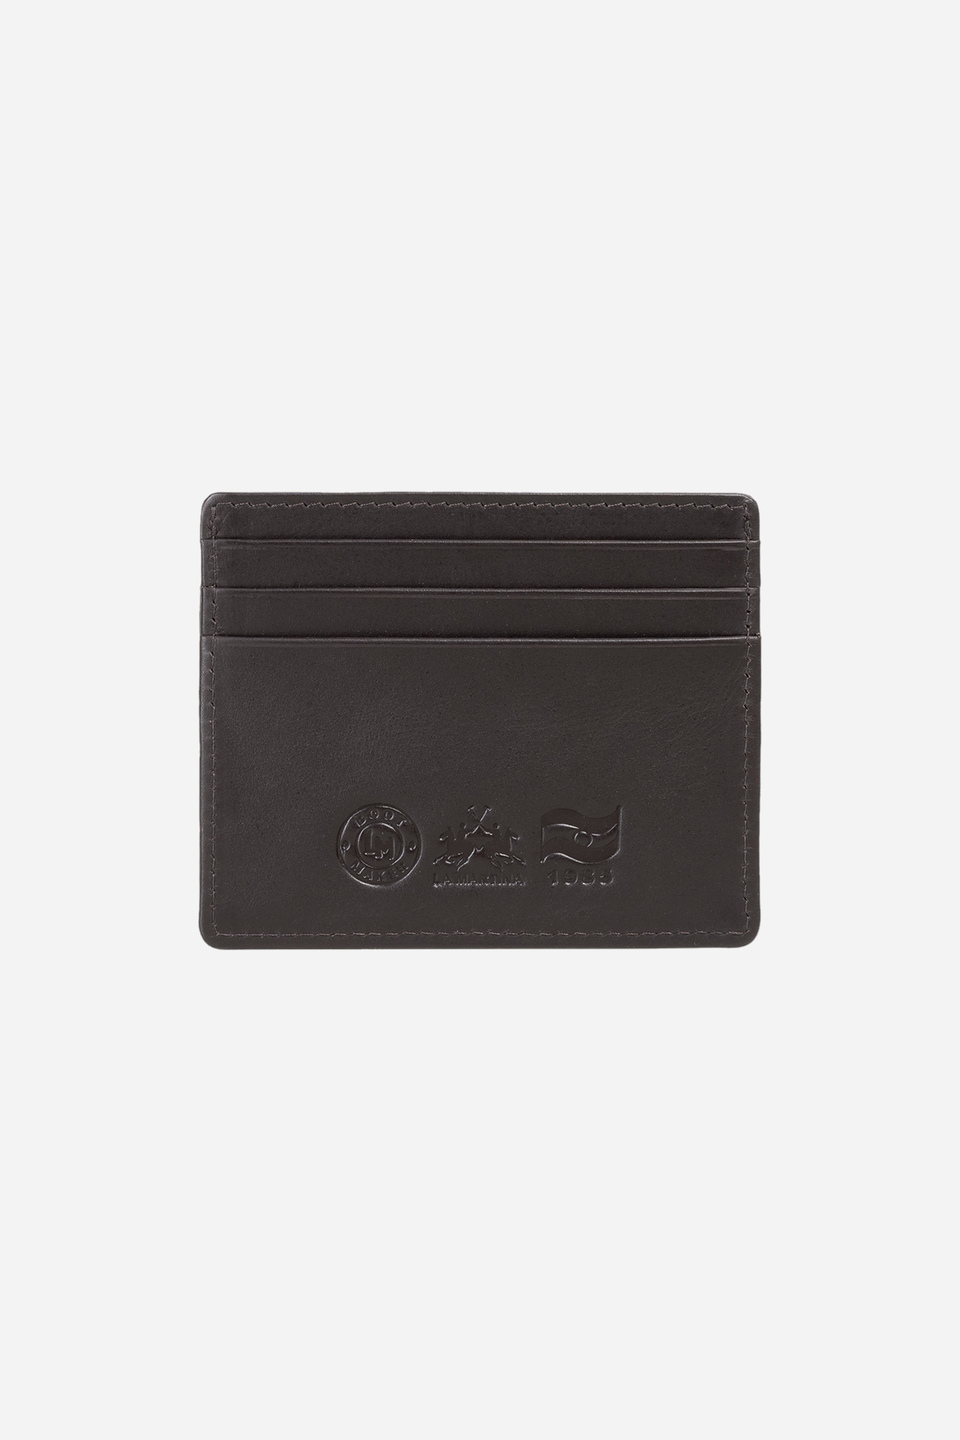 DuDu Leather Wallet With Coin Pocket For Men - Black | Wallets Online